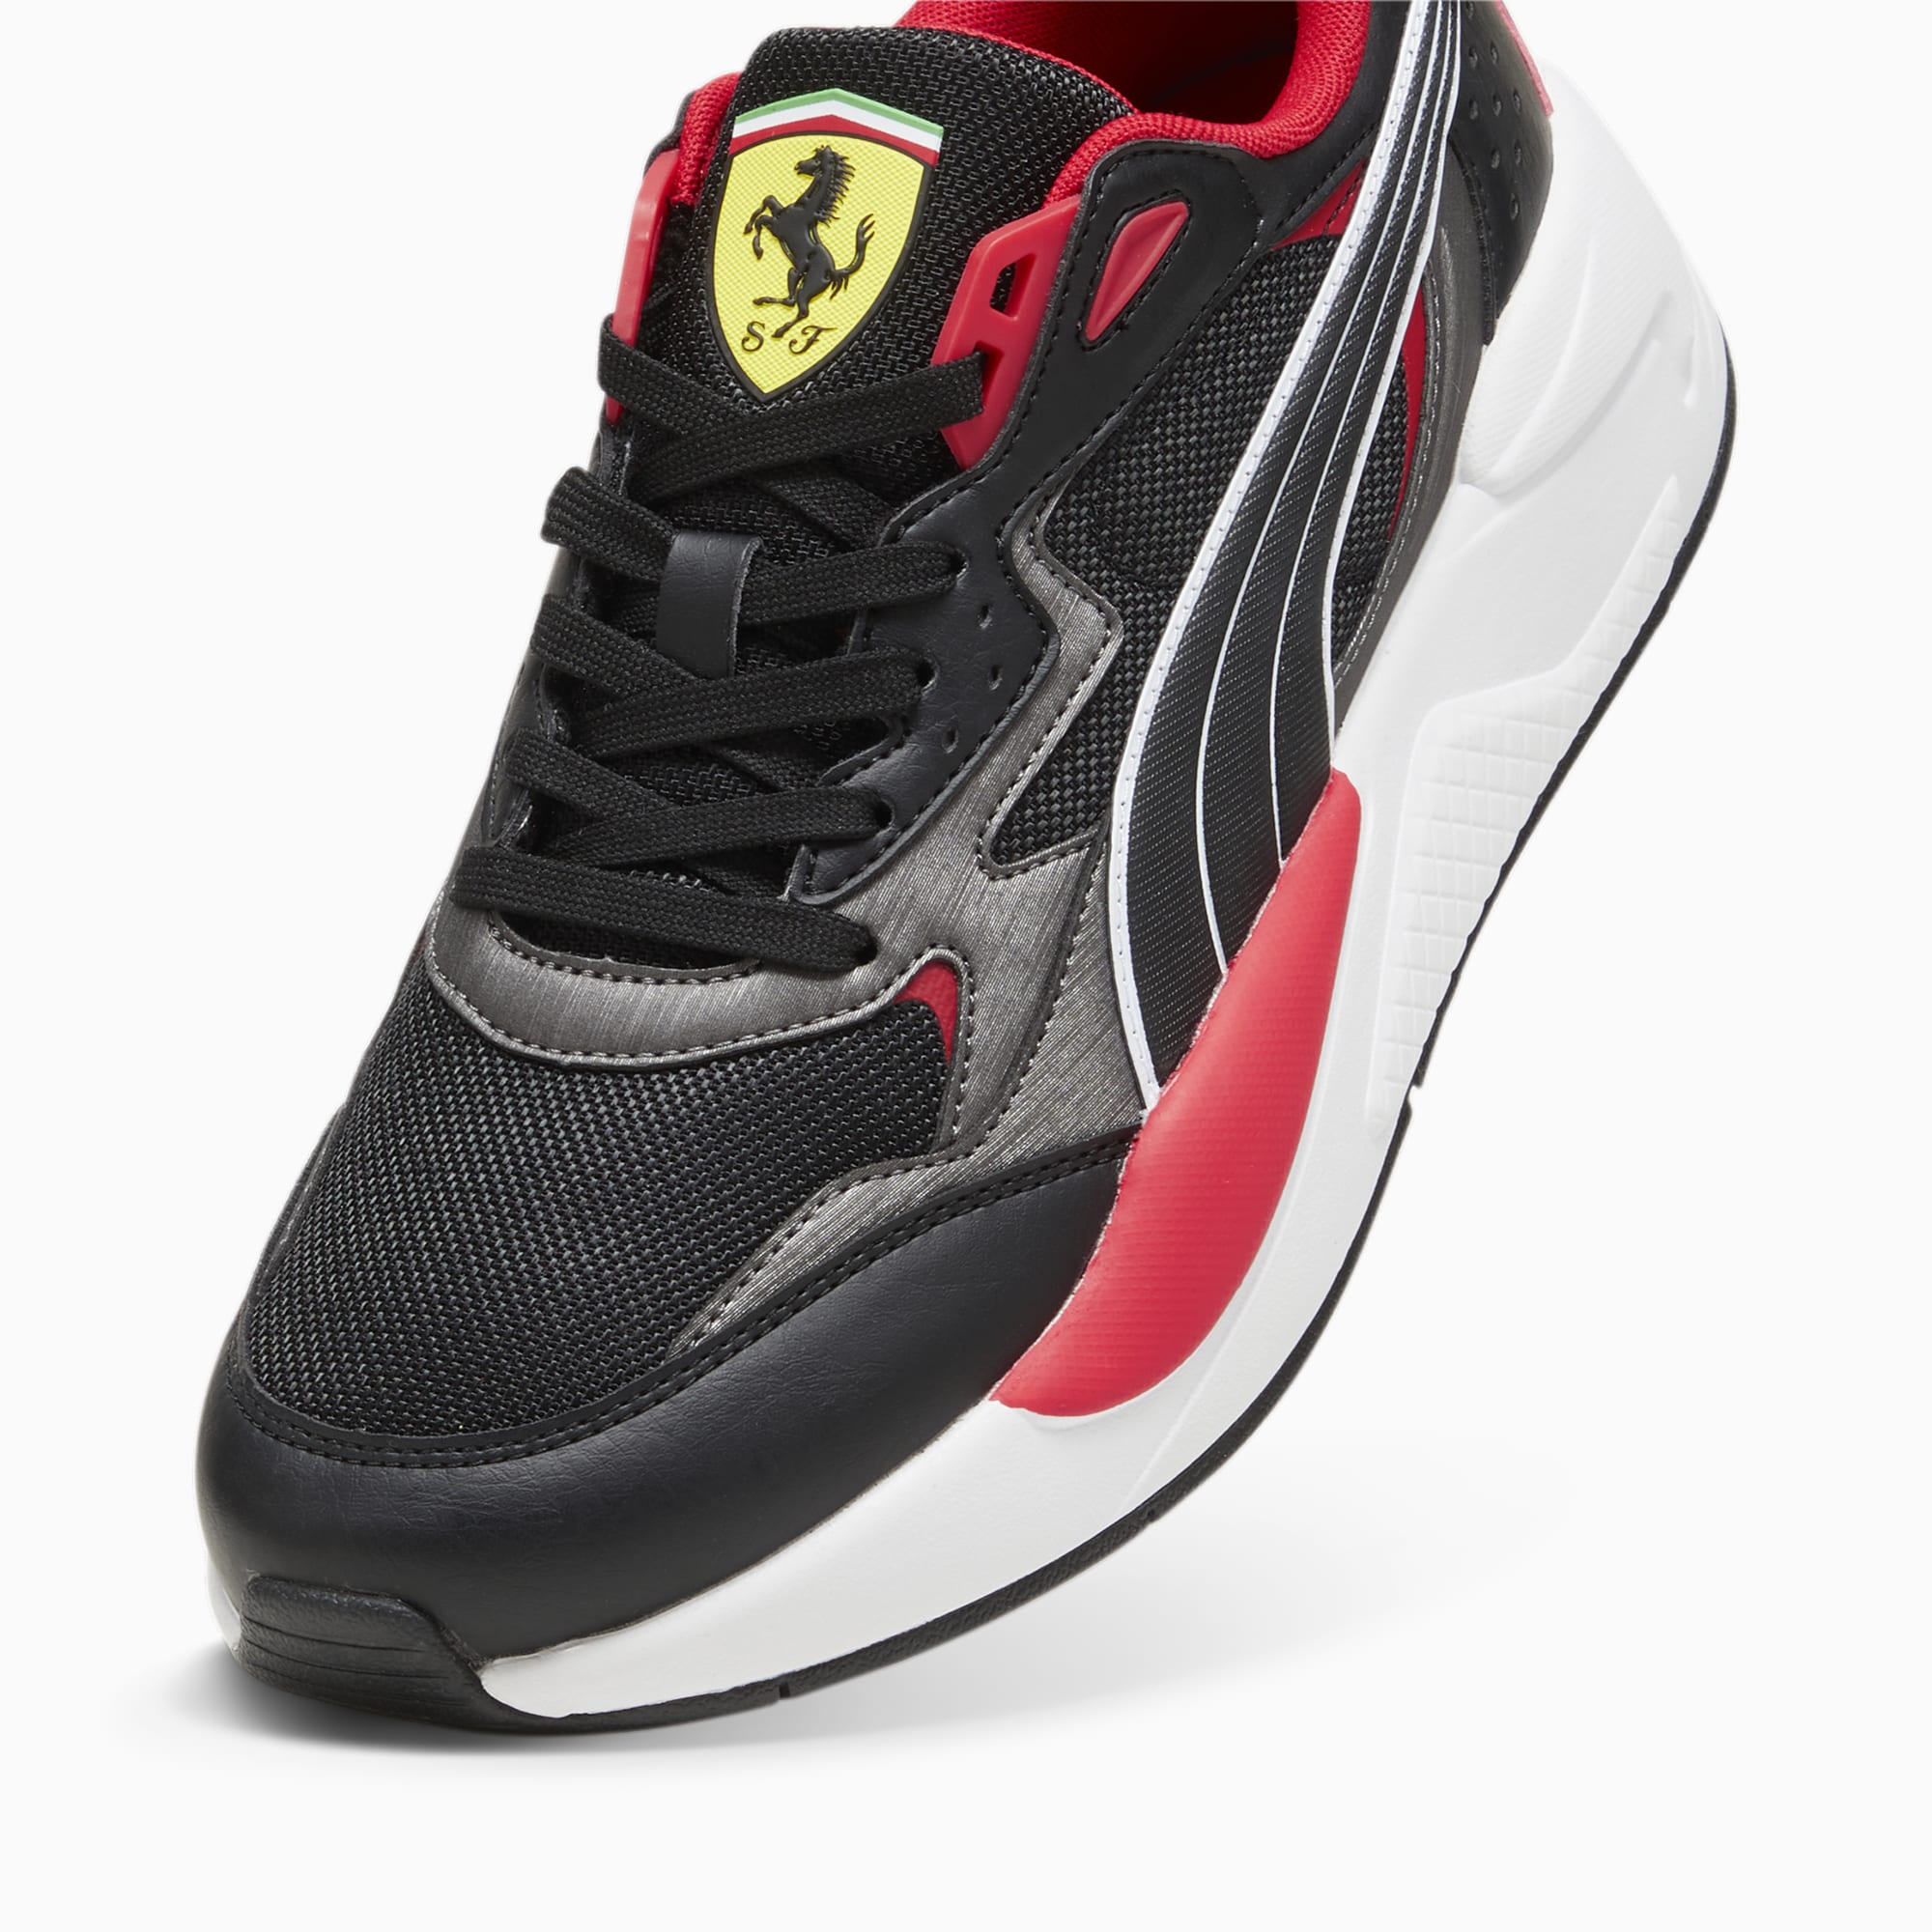 PUMA Scuderia Ferrari X-Ray Speed Motorsport Schuhe, Schwarz/Rot/Silber, Größe: 39, Schuhe